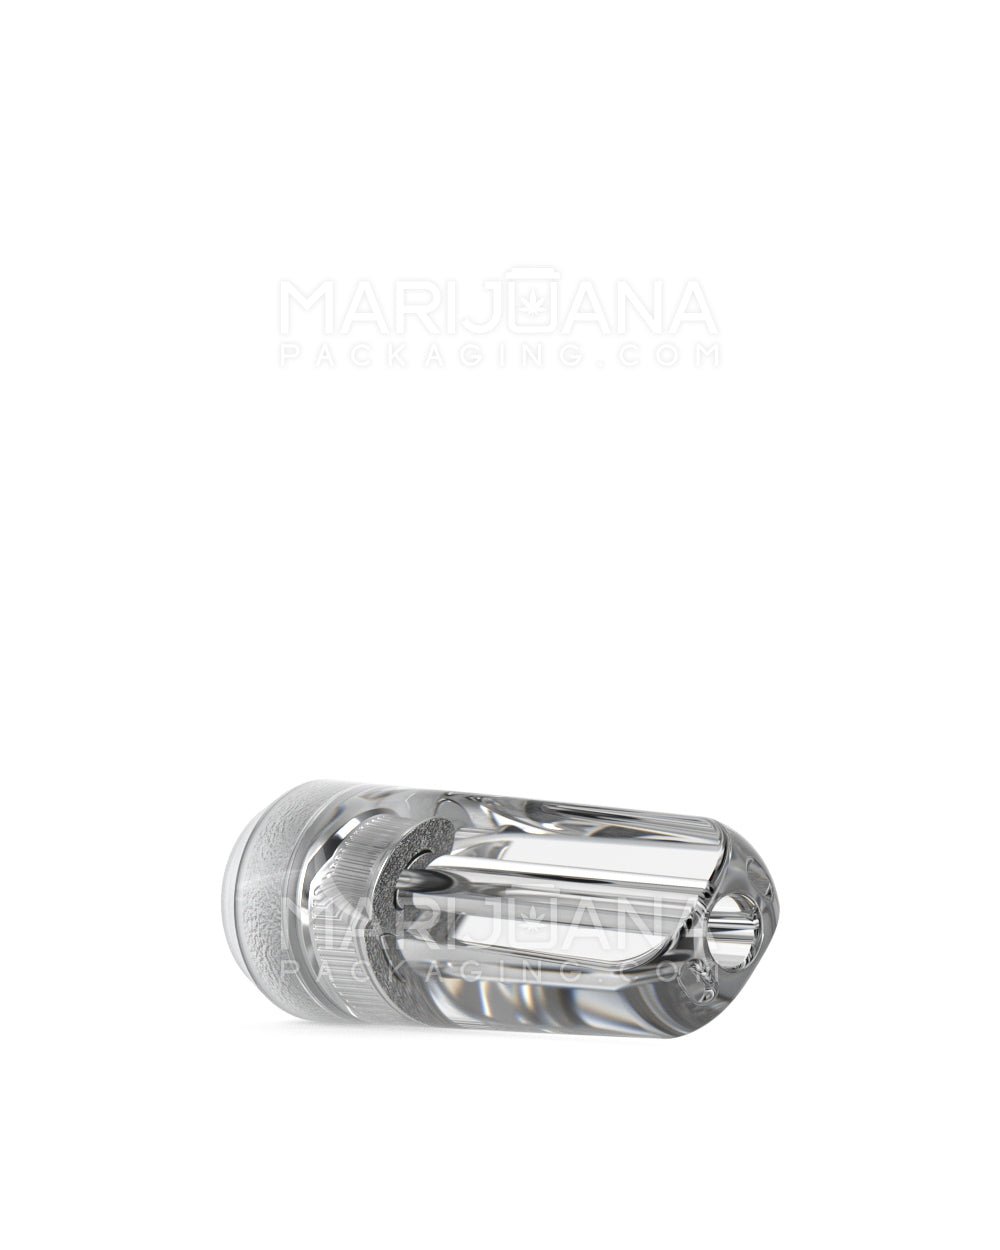 RAE | Flat Vape Mouthpiece for Hand Press Plastic Cartridges | Clear Plastic - Hand Press - 100 Count - 5